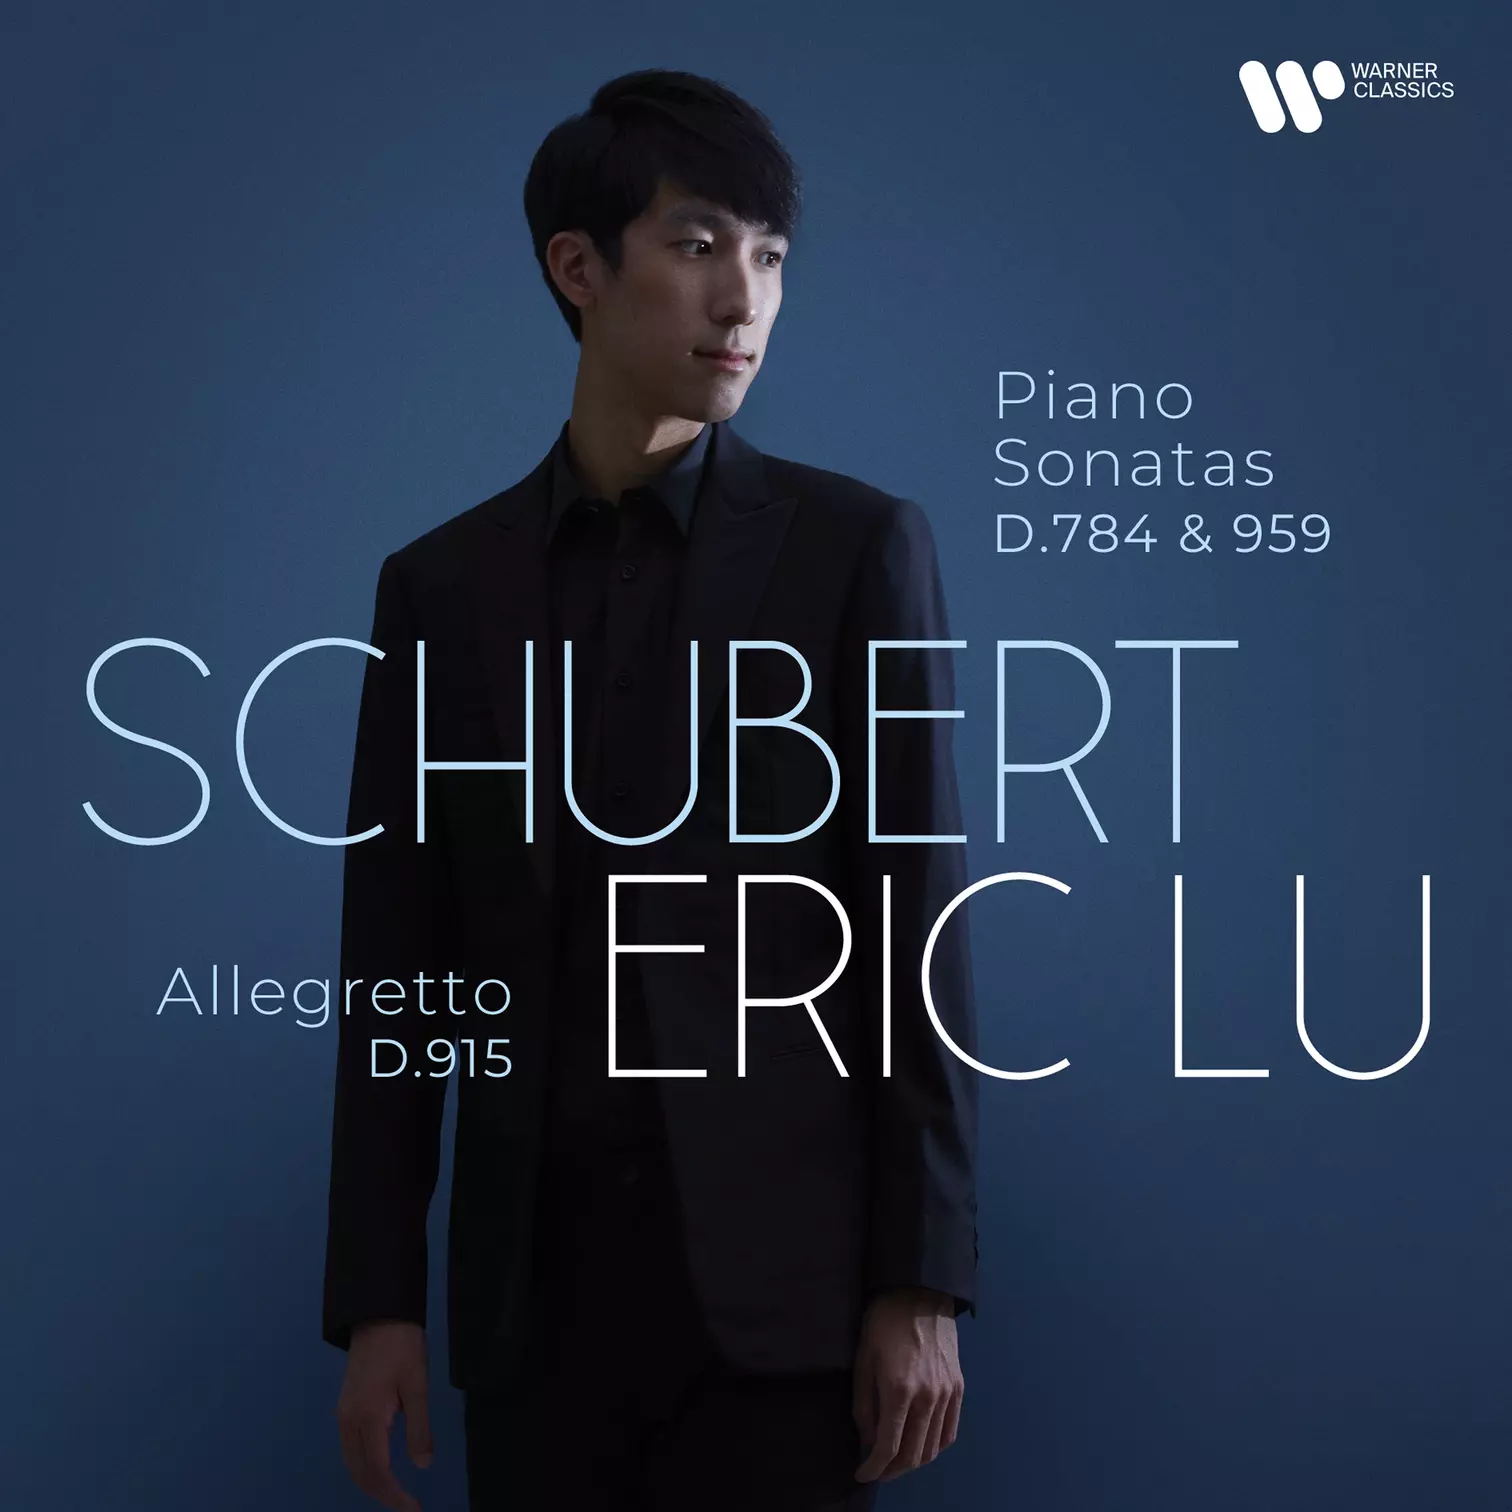 Schubert: Piano Sonatas D.784 & D.959 – Allegretto D.915